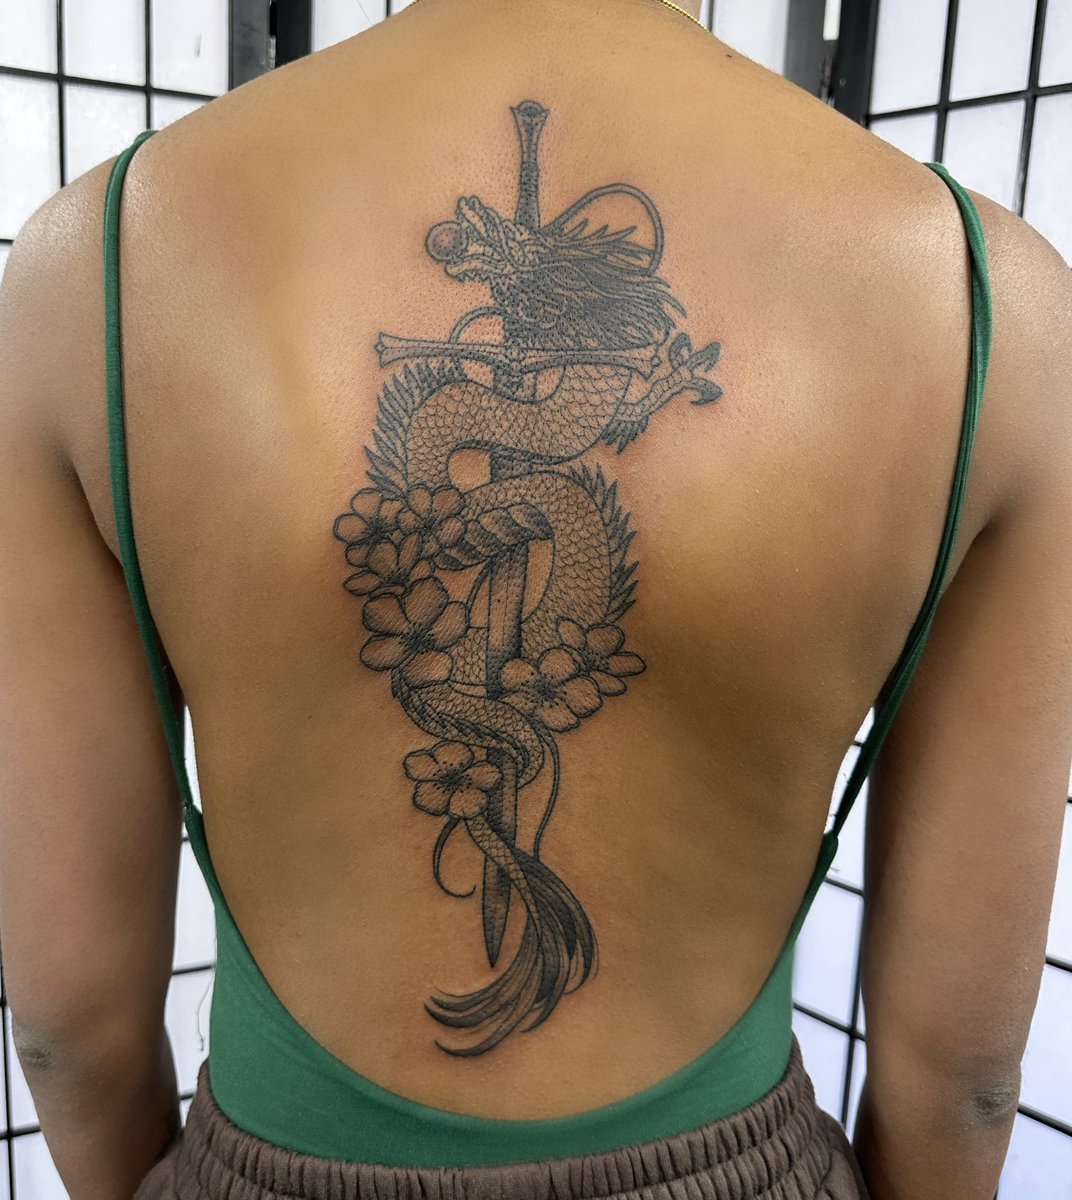 My tattoo artist did some magic😍 im obsessed!! #chinesedragontattoo #chinesezodiac #dragontattoo #dragon #hawthorn #maybirthflower